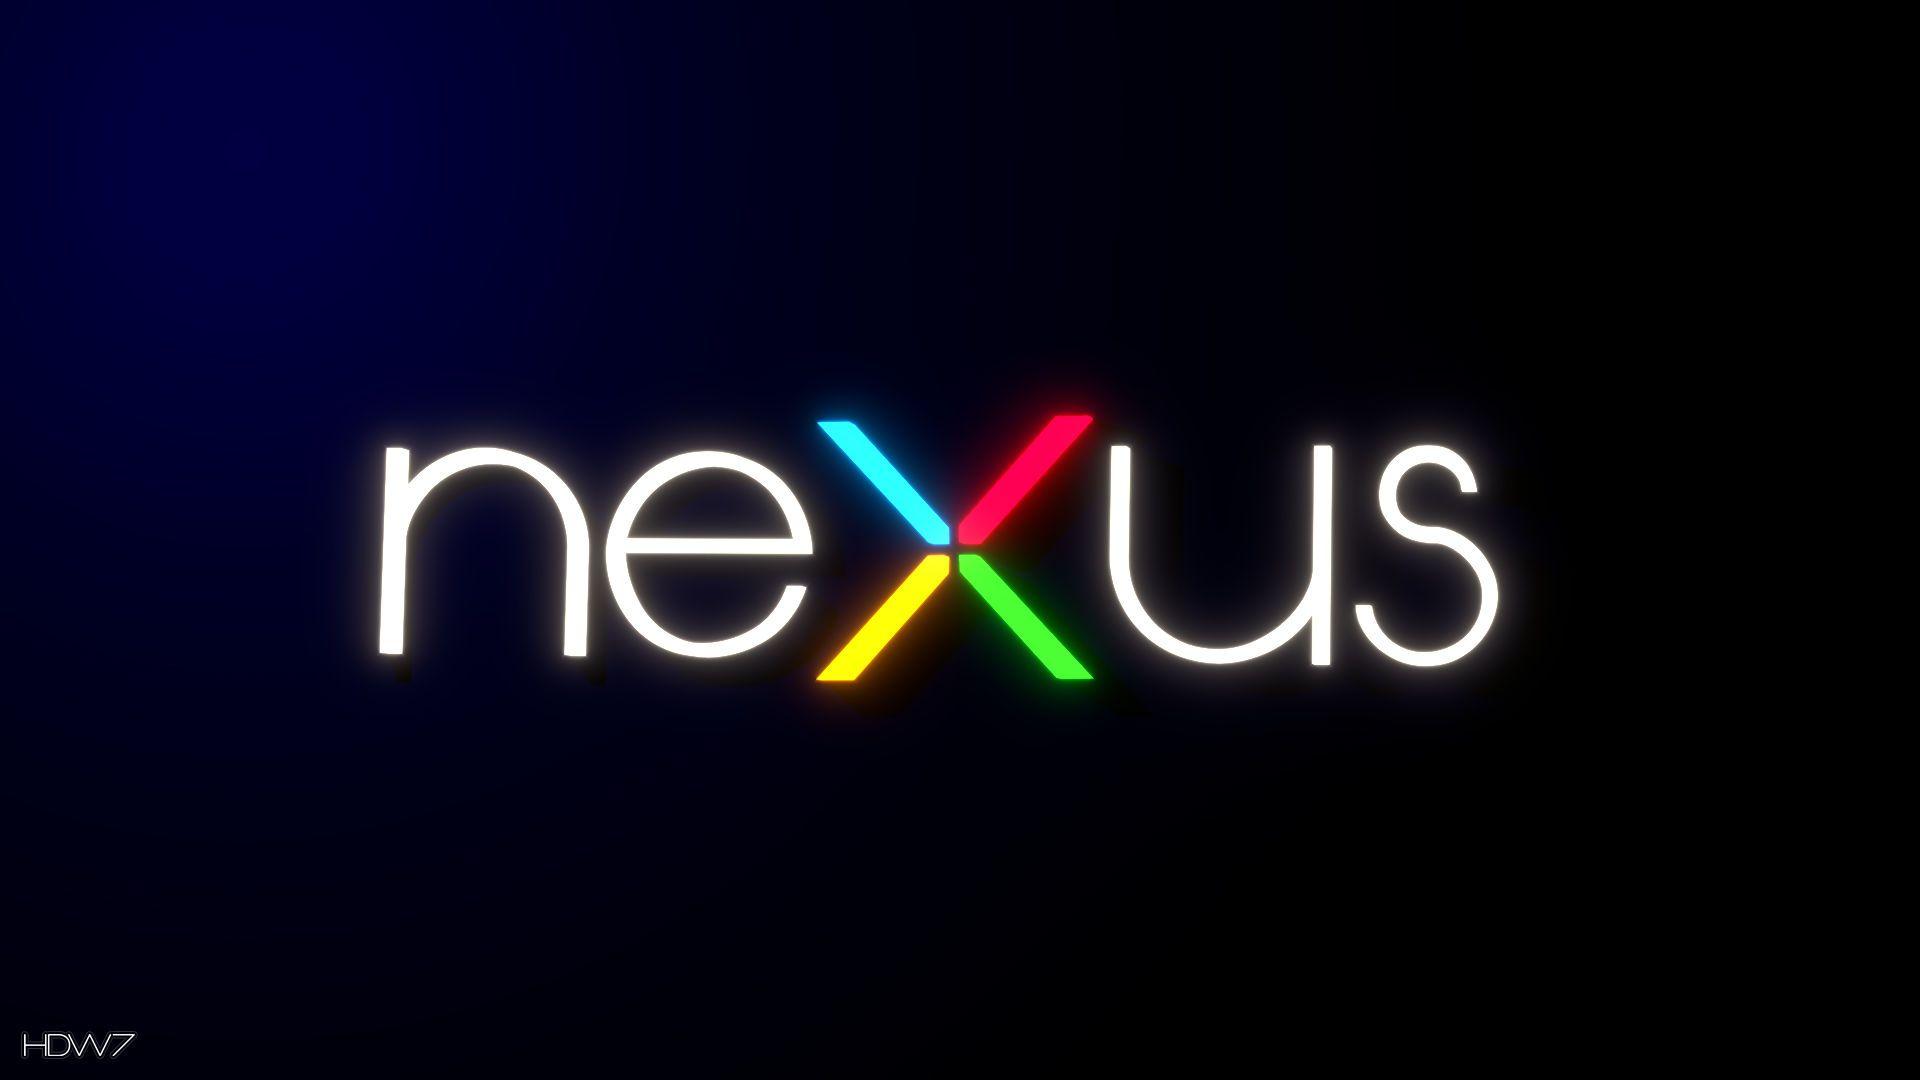 nexus logo. HD wallpaper gallery